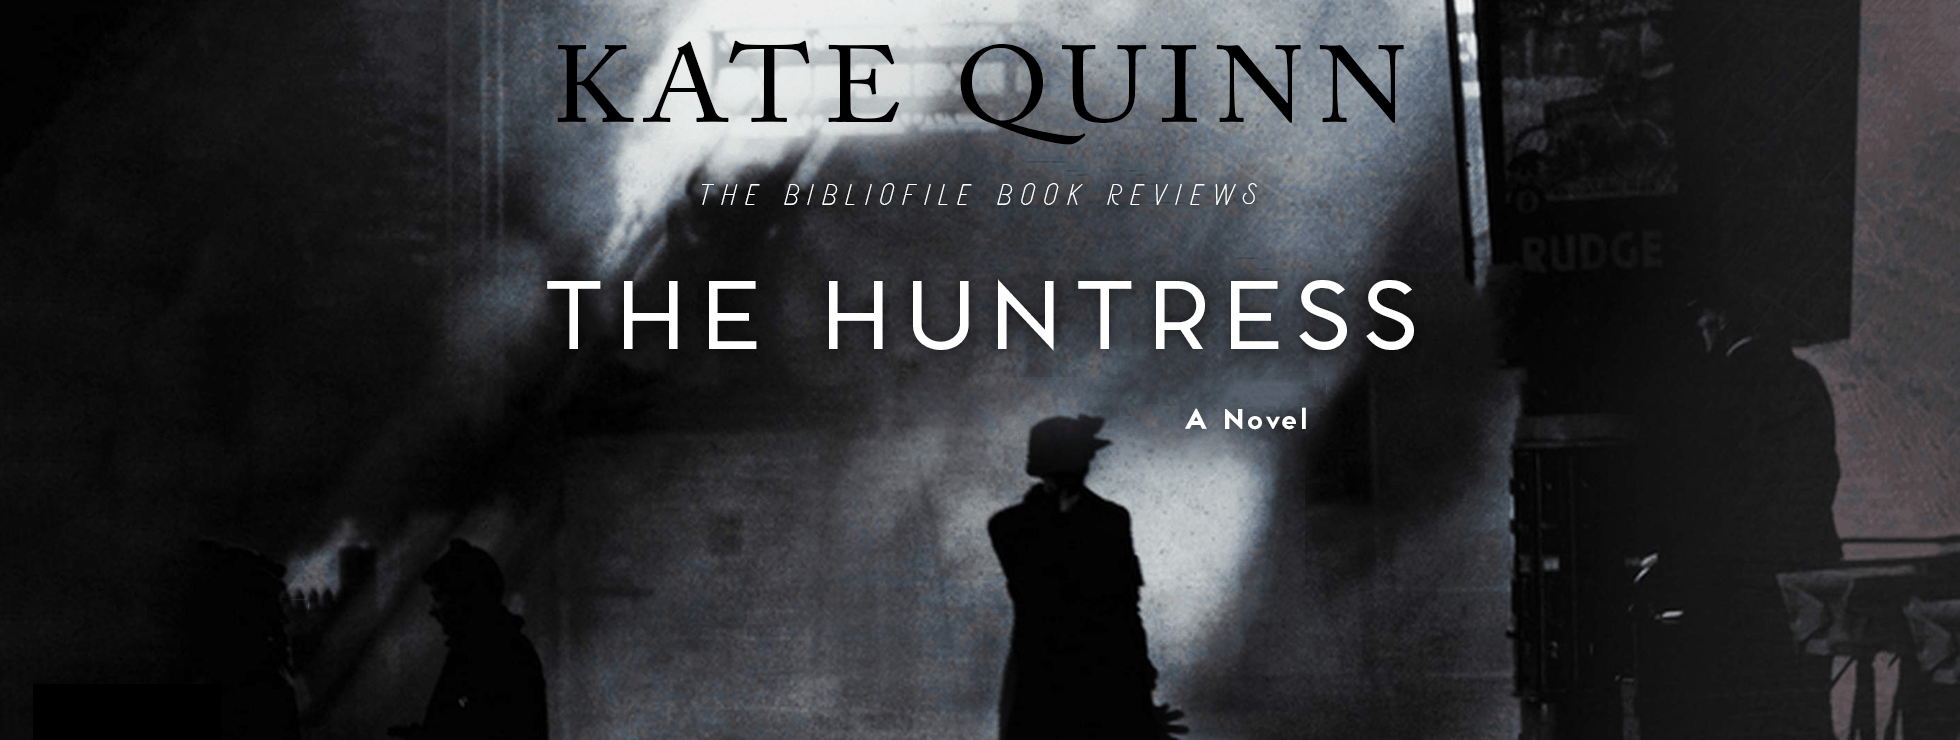 huntress review summary kate quinn